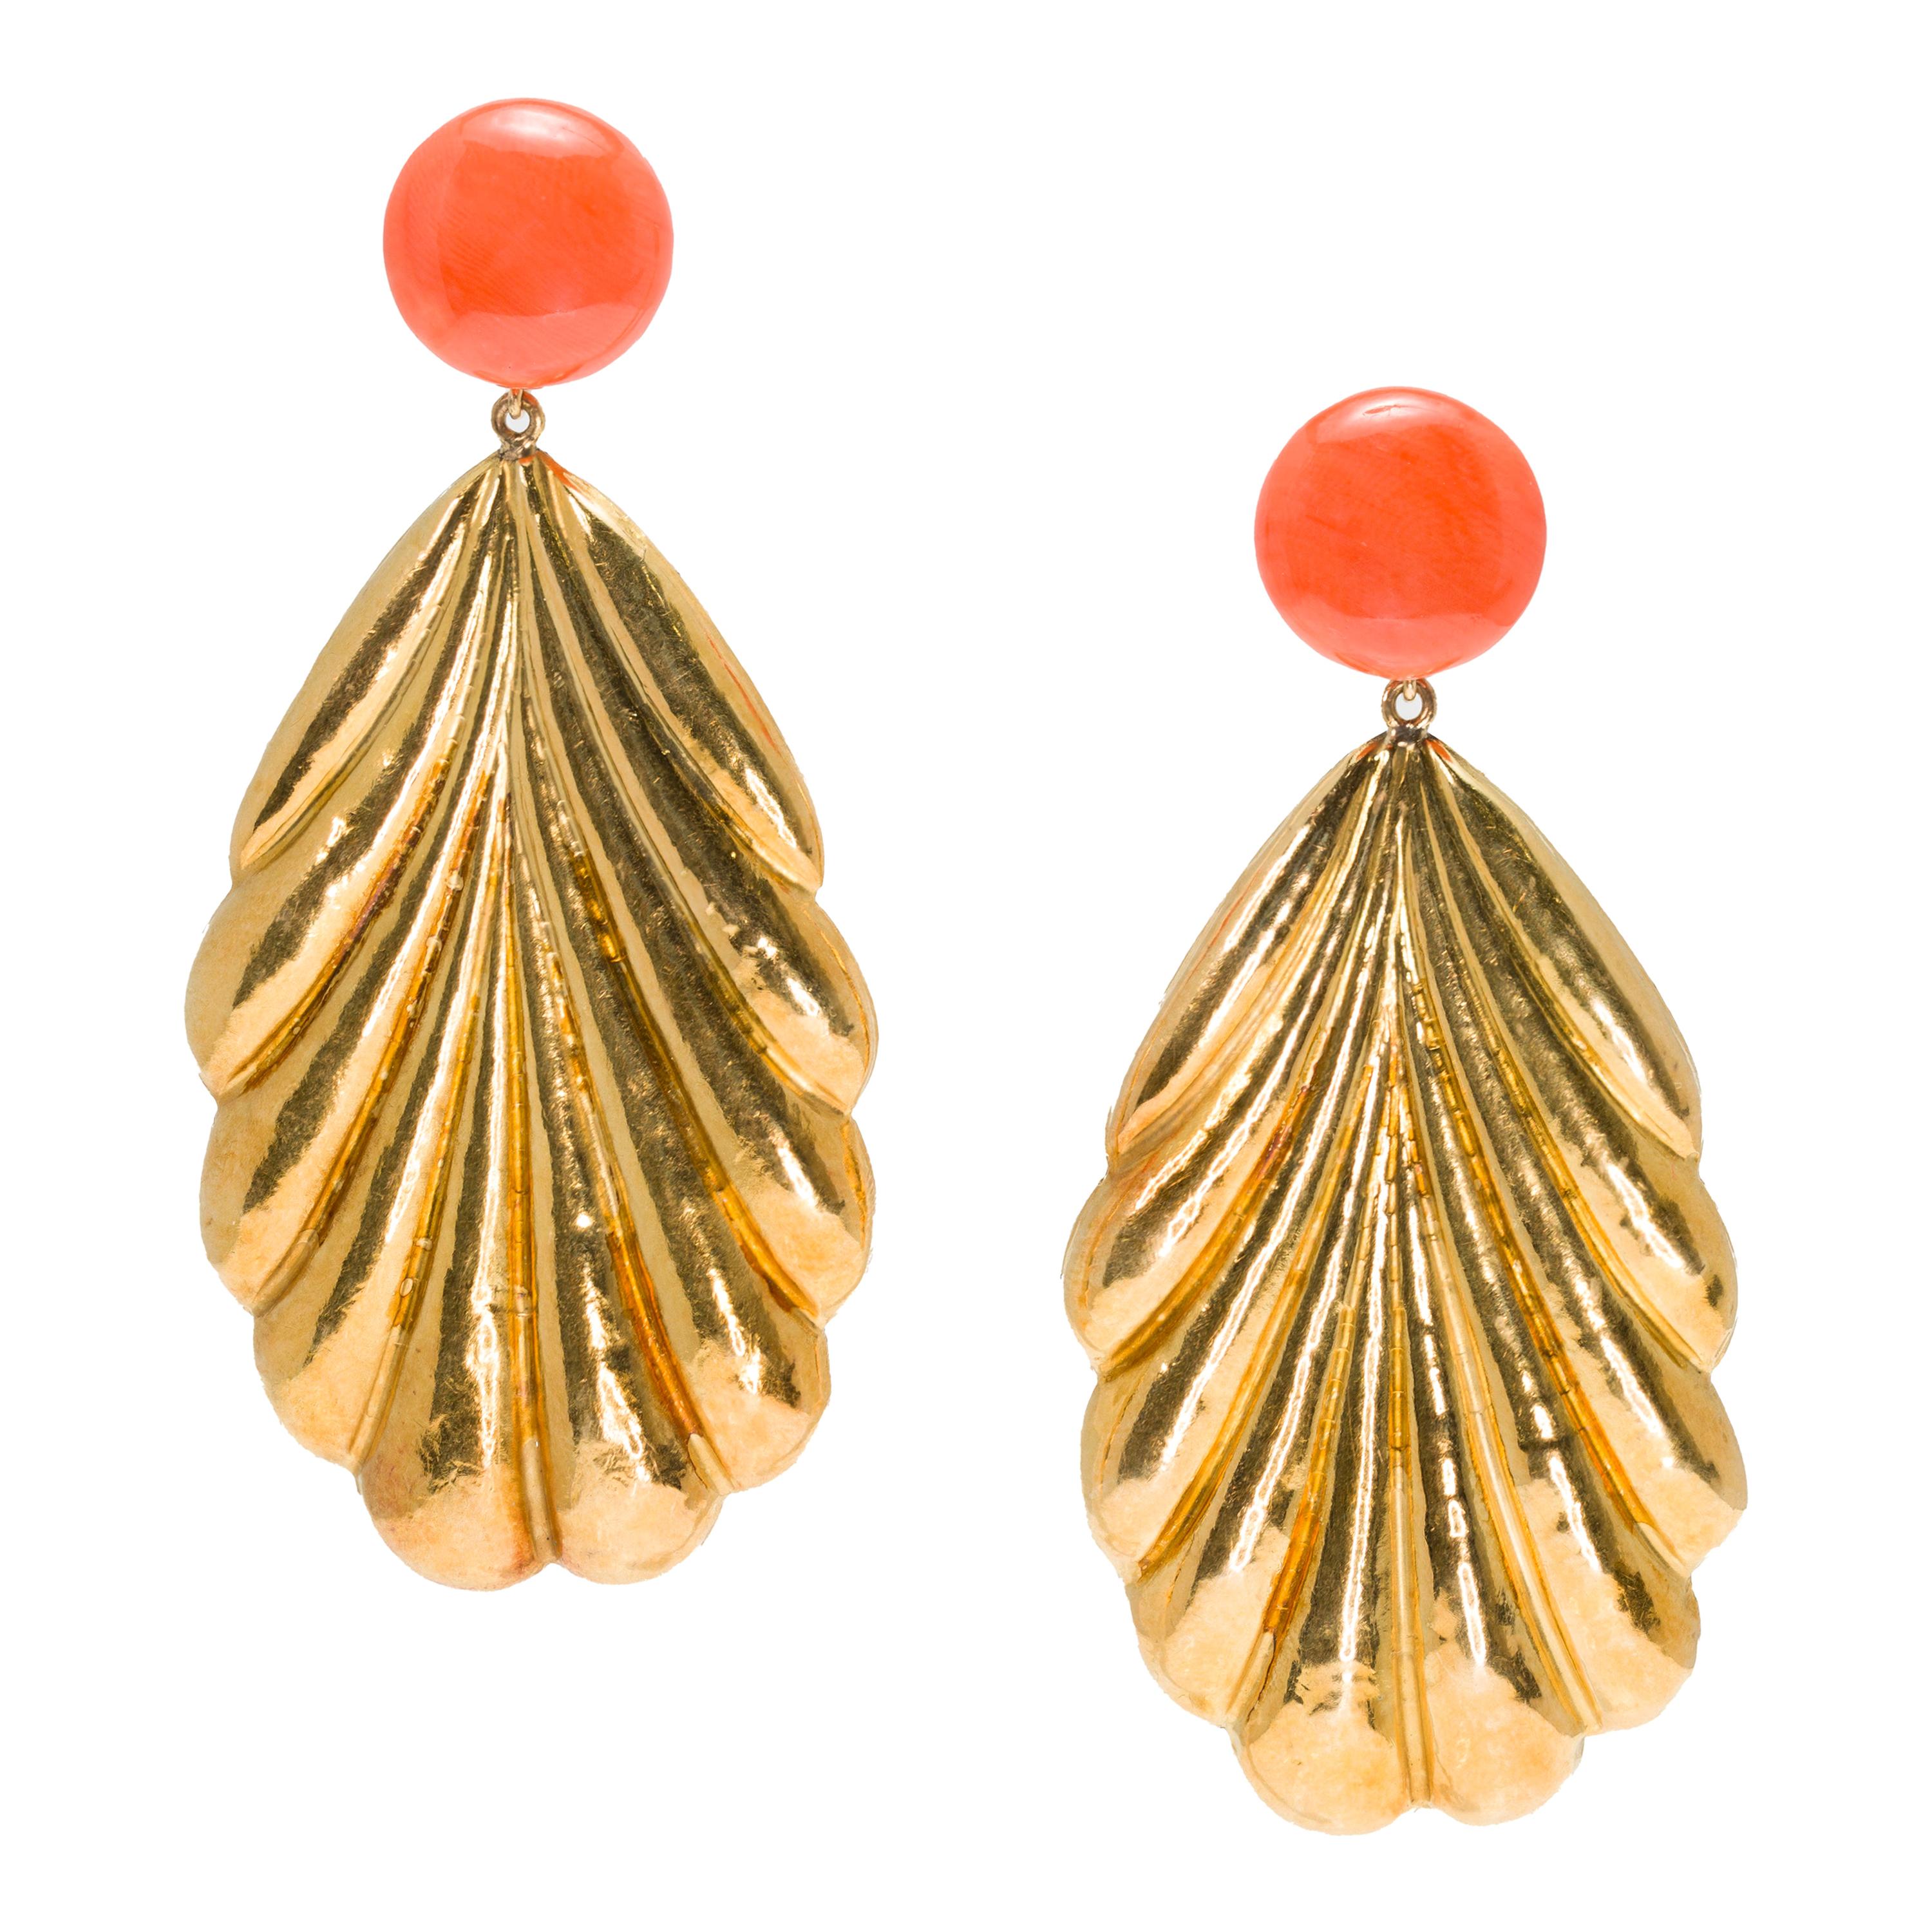 Pair of Italian 1960s Salmon Coral Dangling Leaf Earrings in 18 Karat Gold